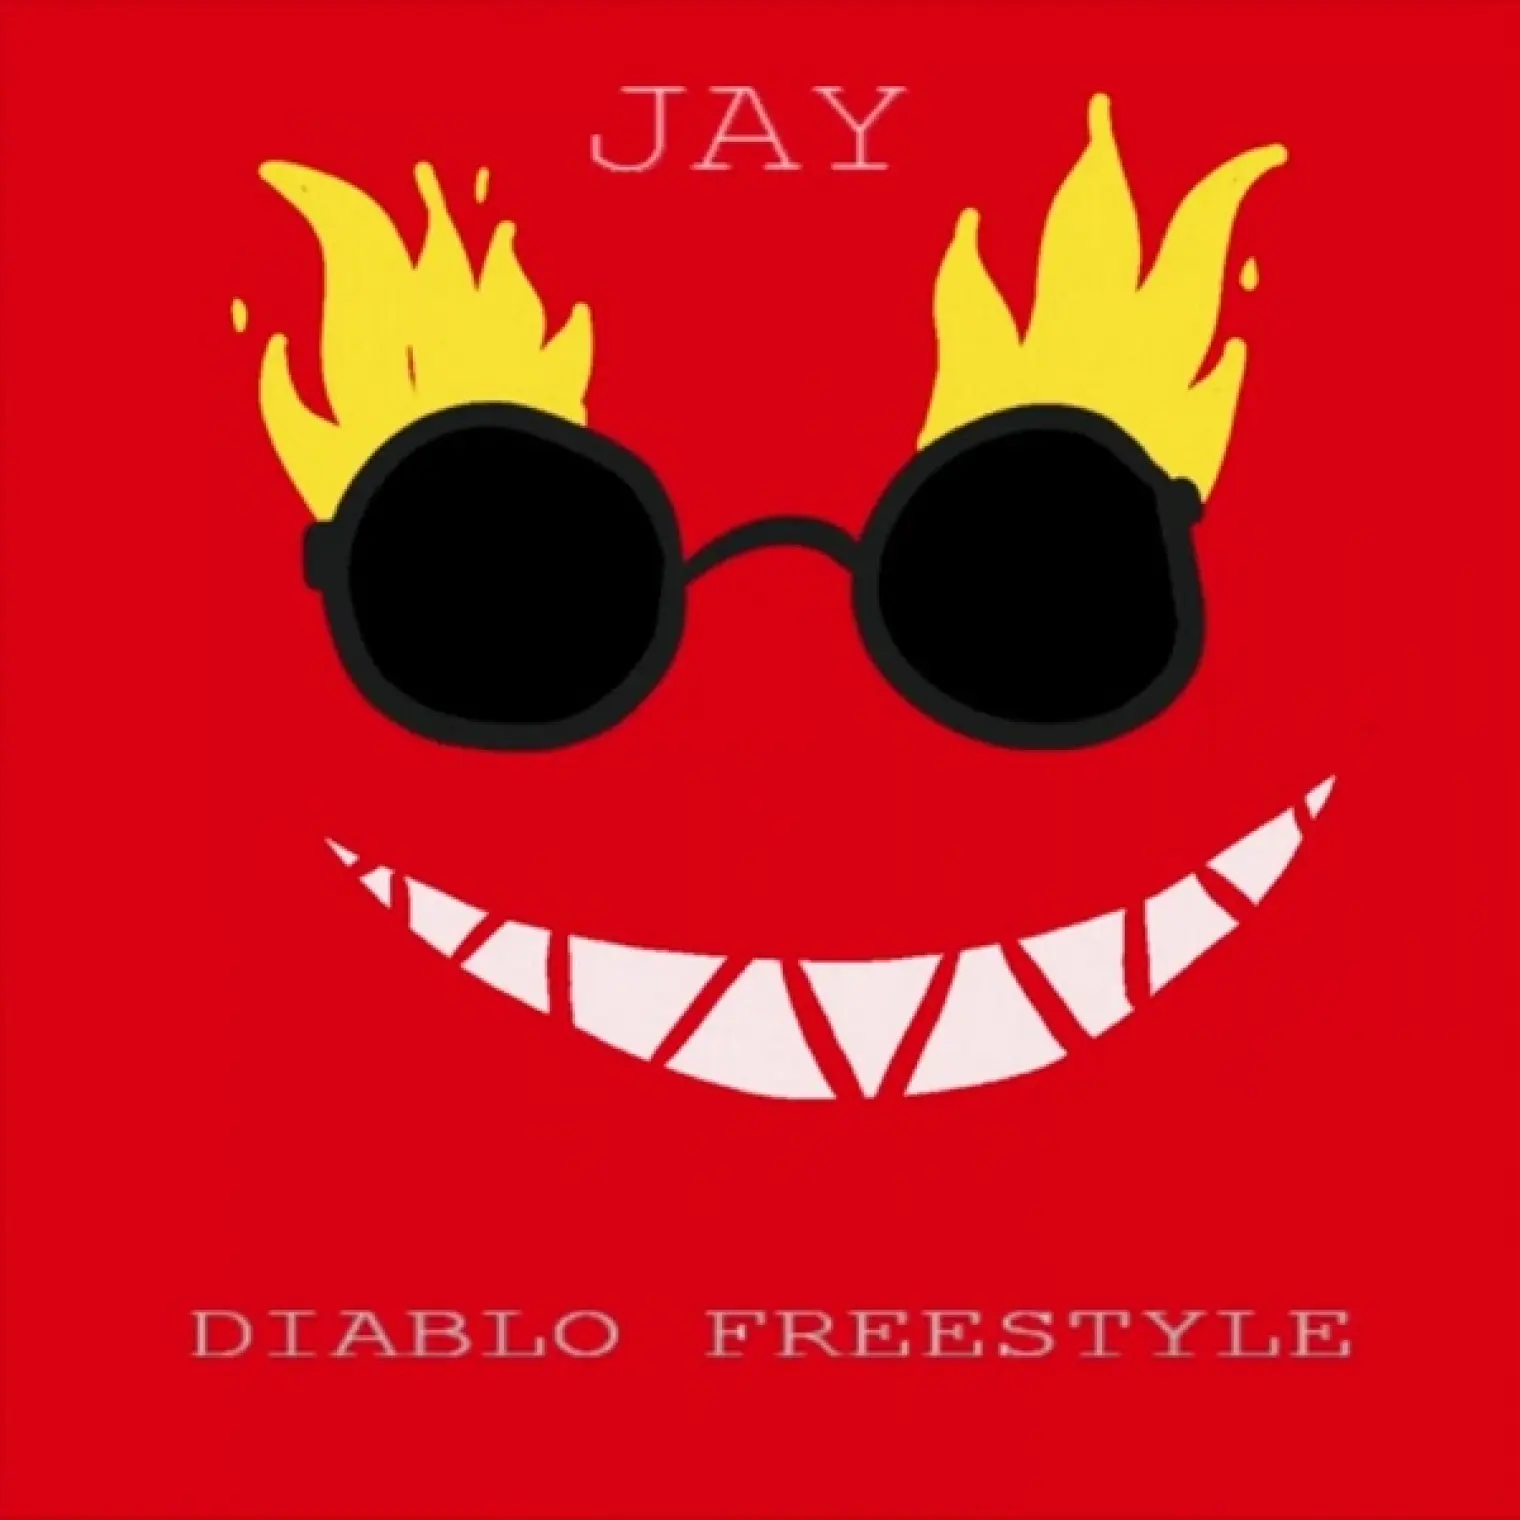 Diablo freestyle -  Jay 